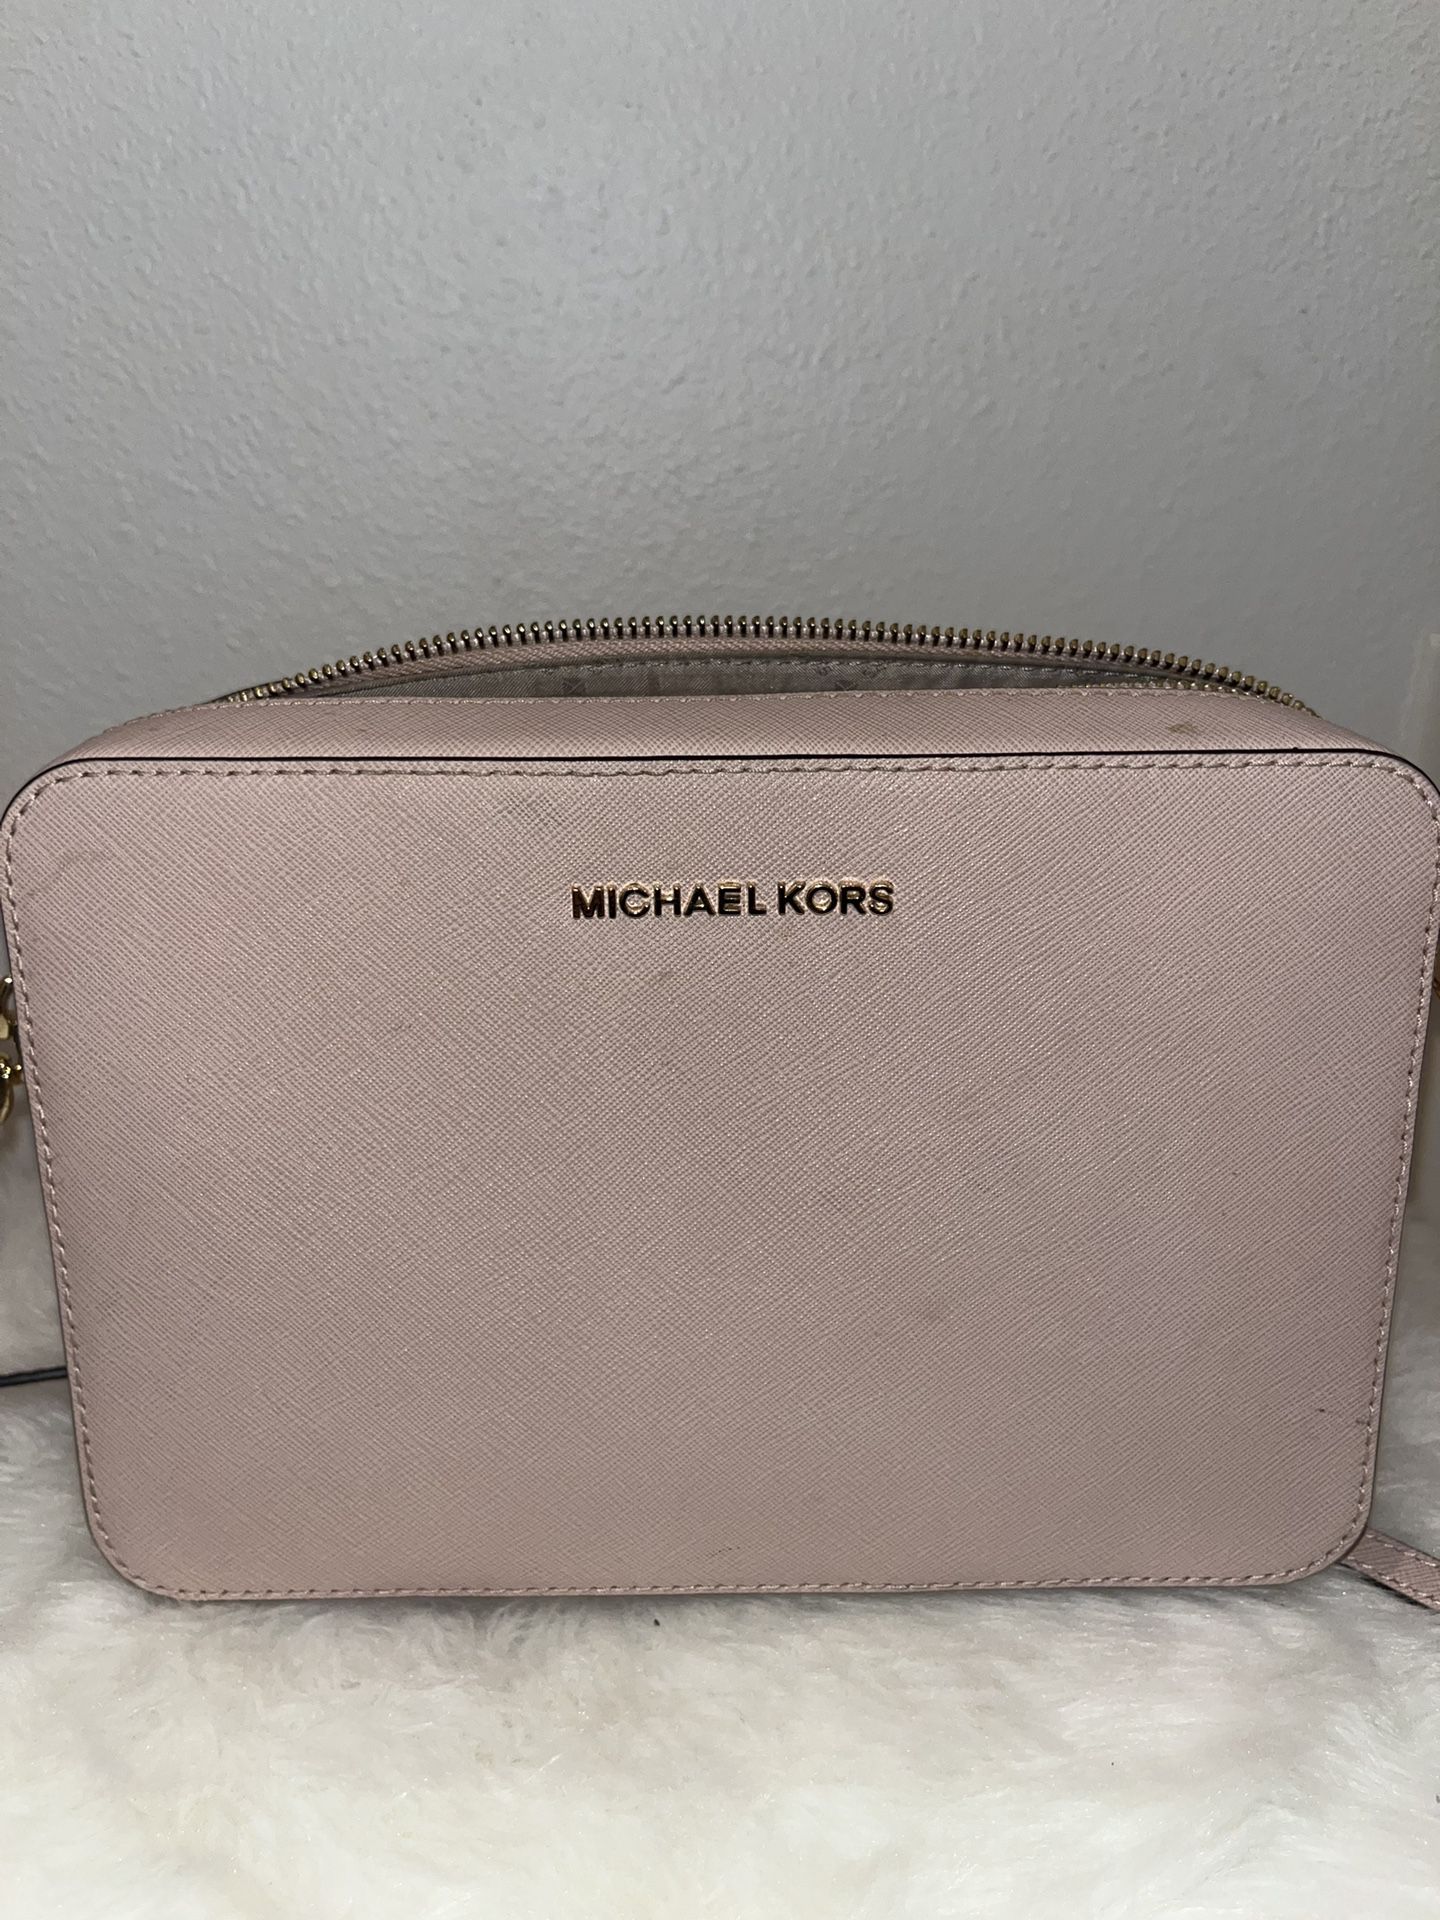 Michael Kors Jet set Leather Crossbody Bag - Pastel Pink